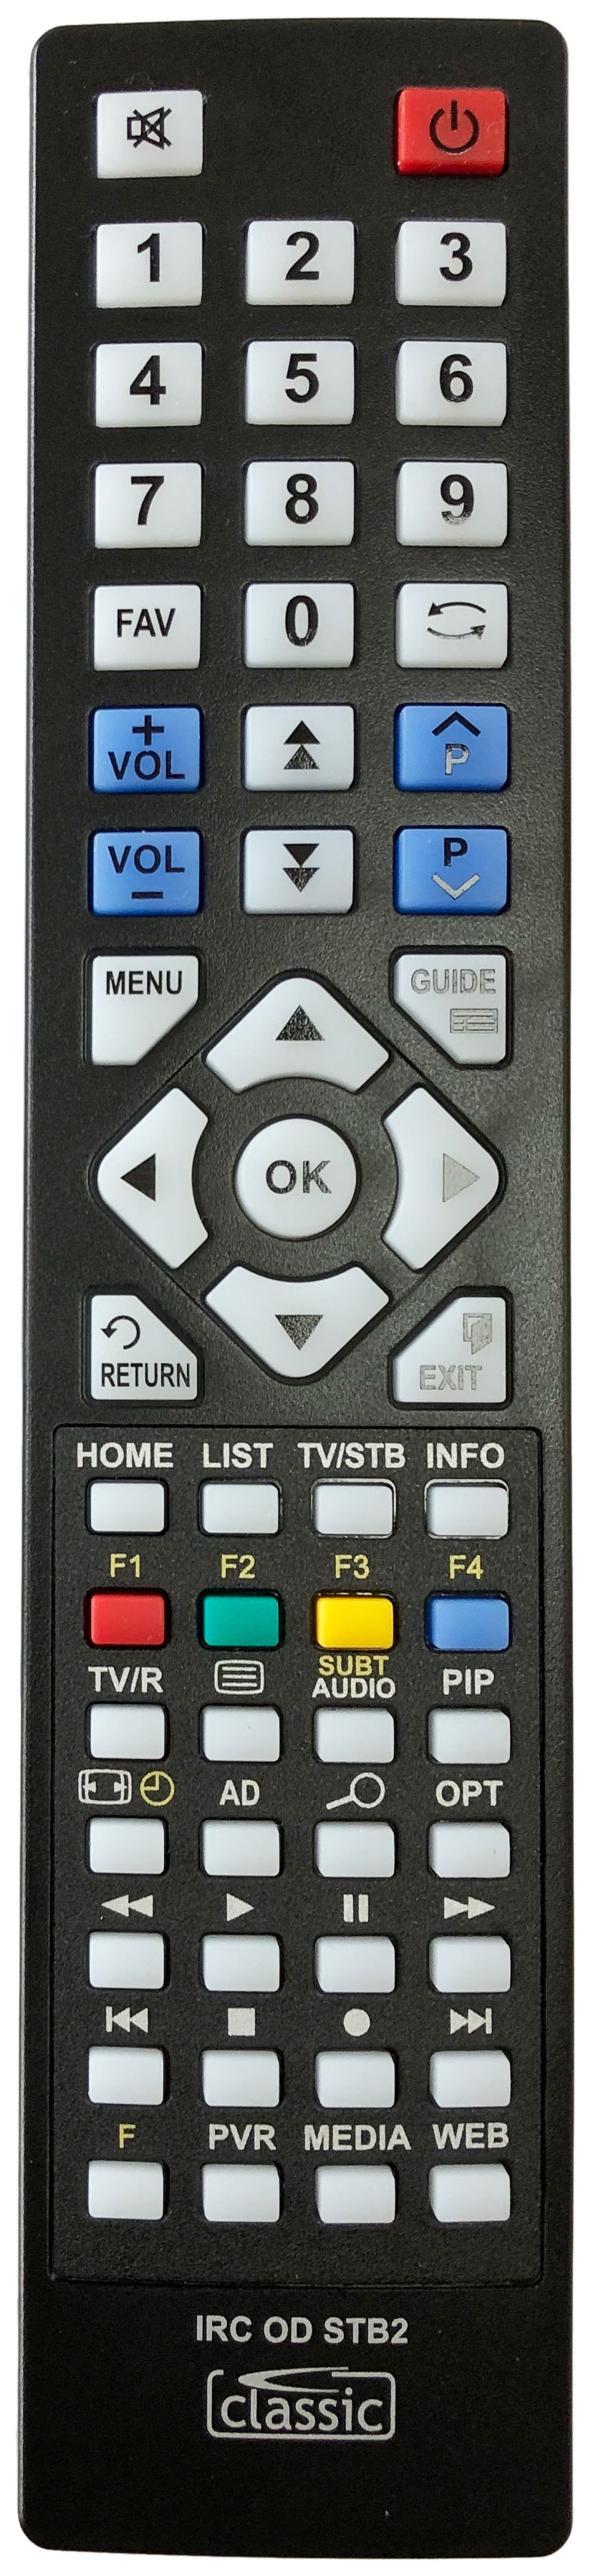 AKURA RC 2900 Remote Control Alternative